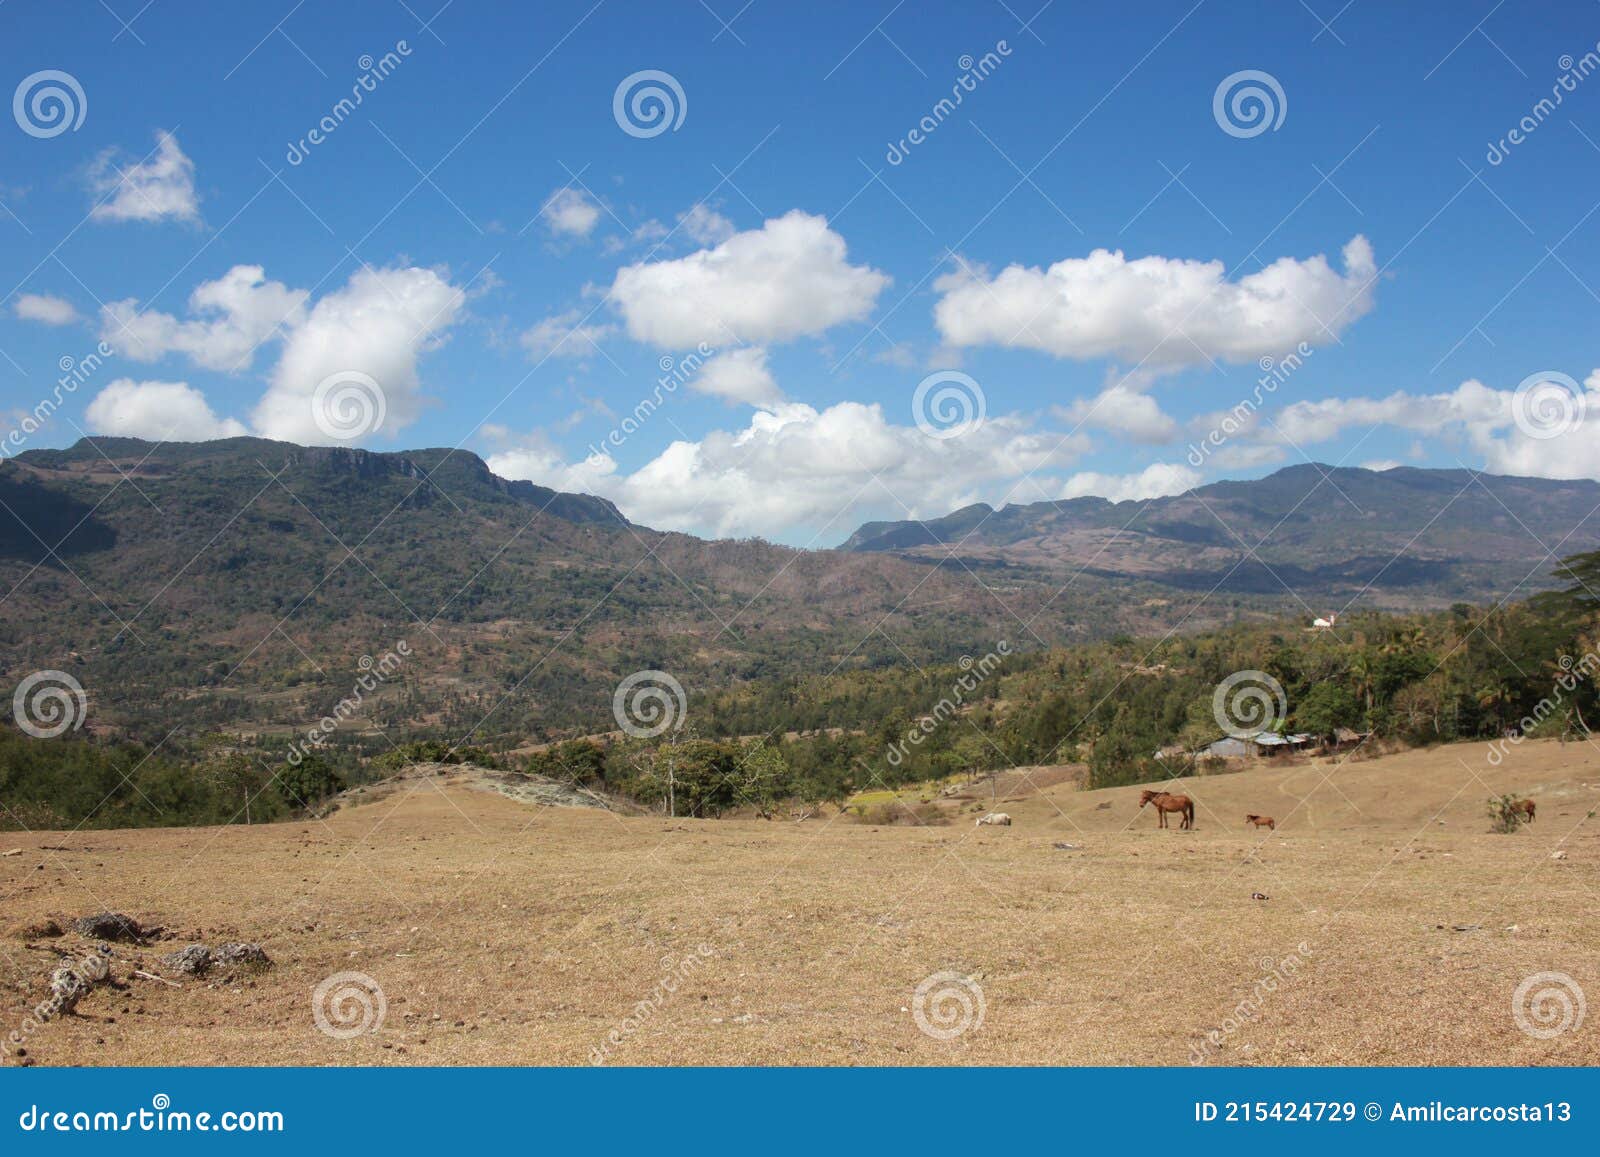 mundo perdido mountain view from venilale, timor-leste.